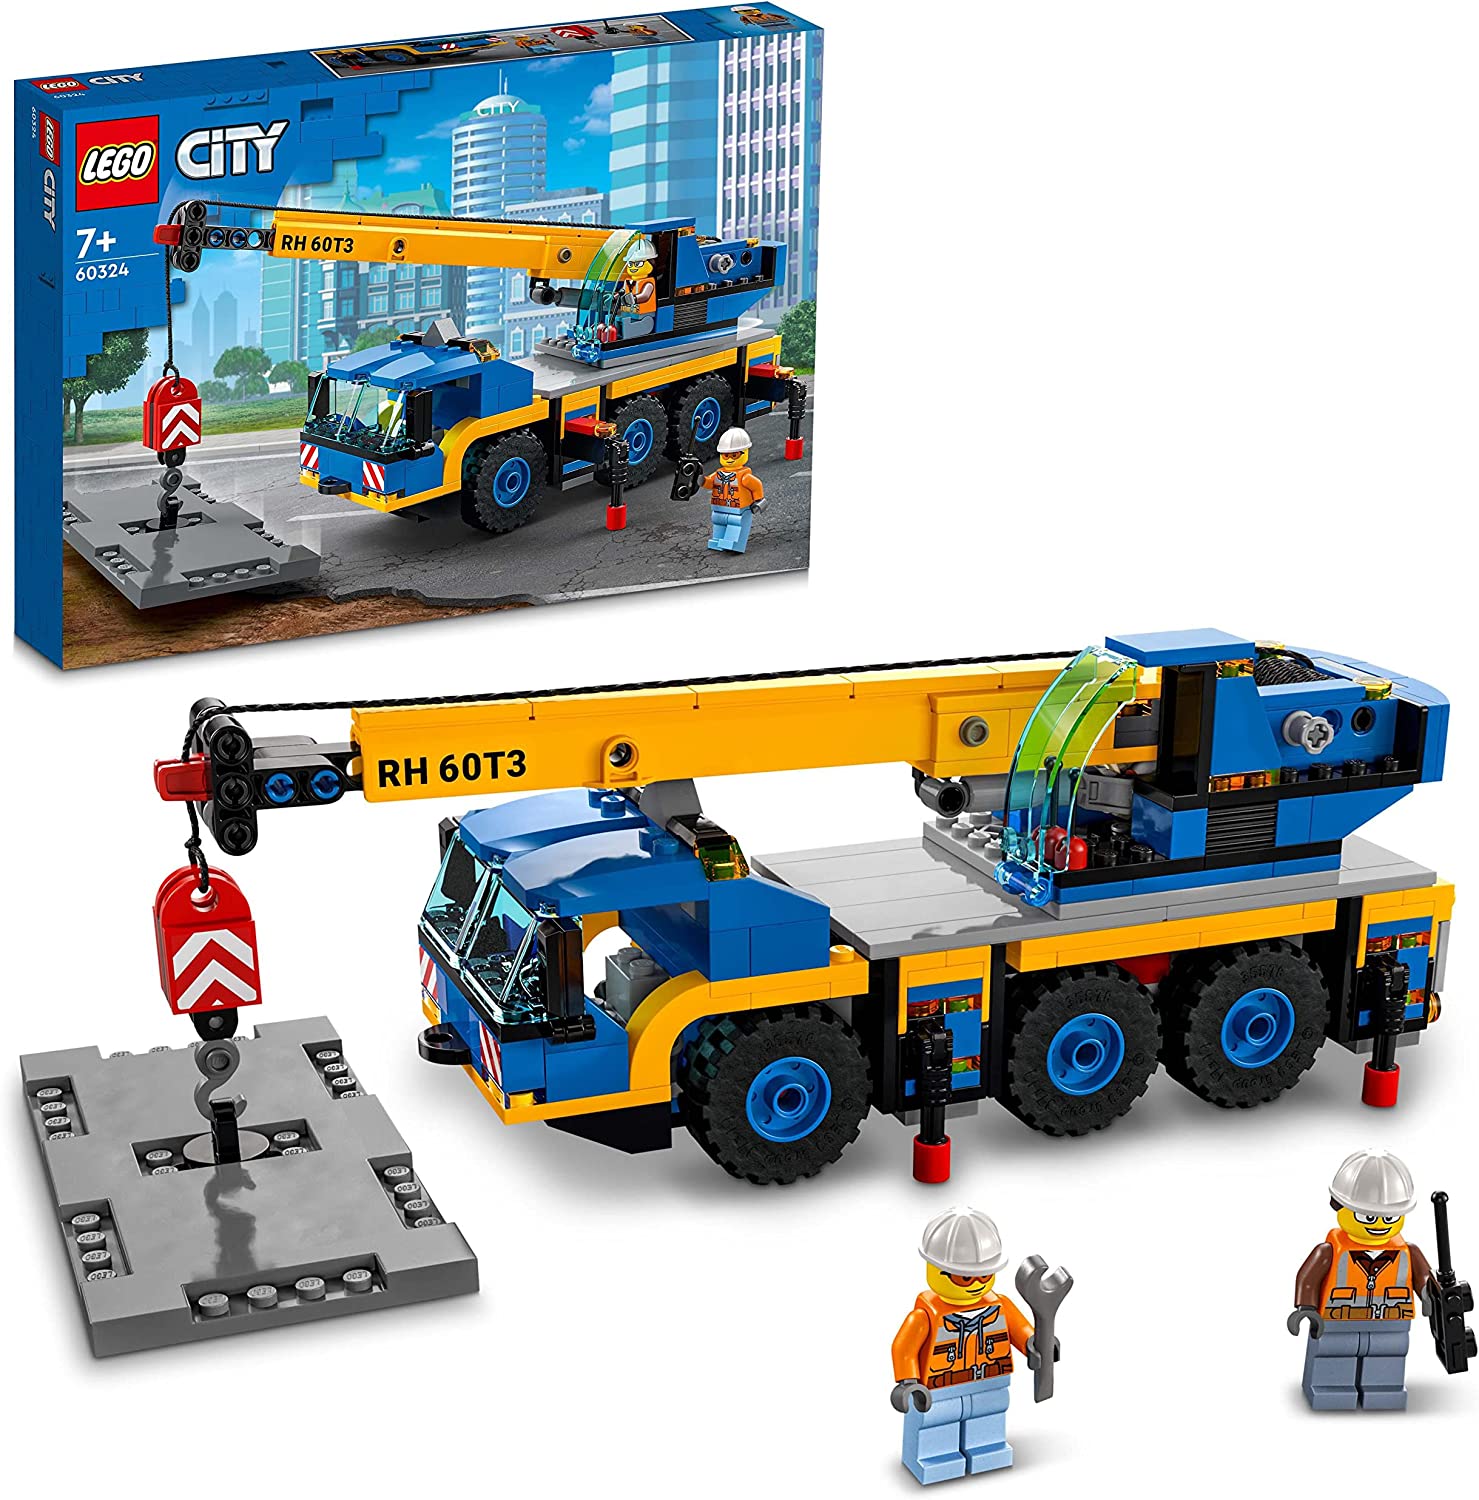 Lego City Great Vehicles Mobile Crane Set